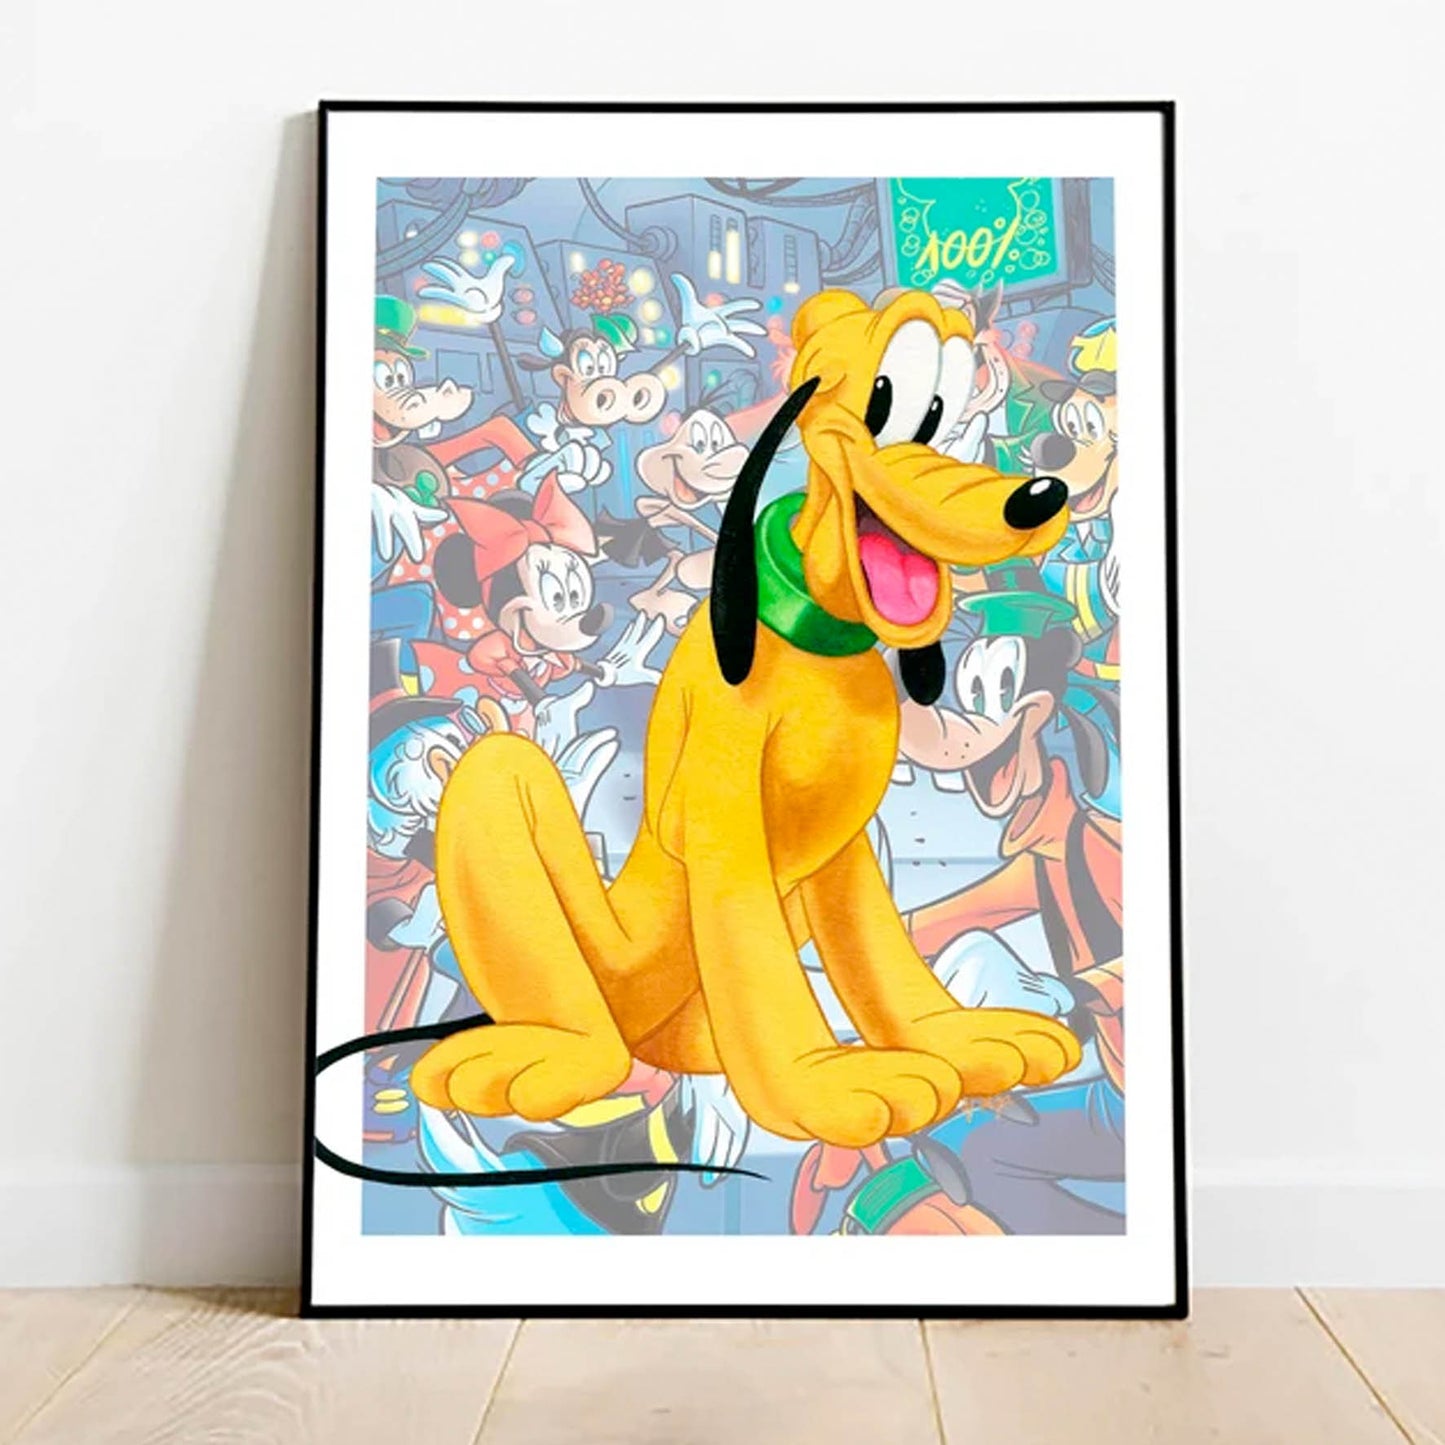 DISNEY Pluto Amigos de Mickey Mouse 77